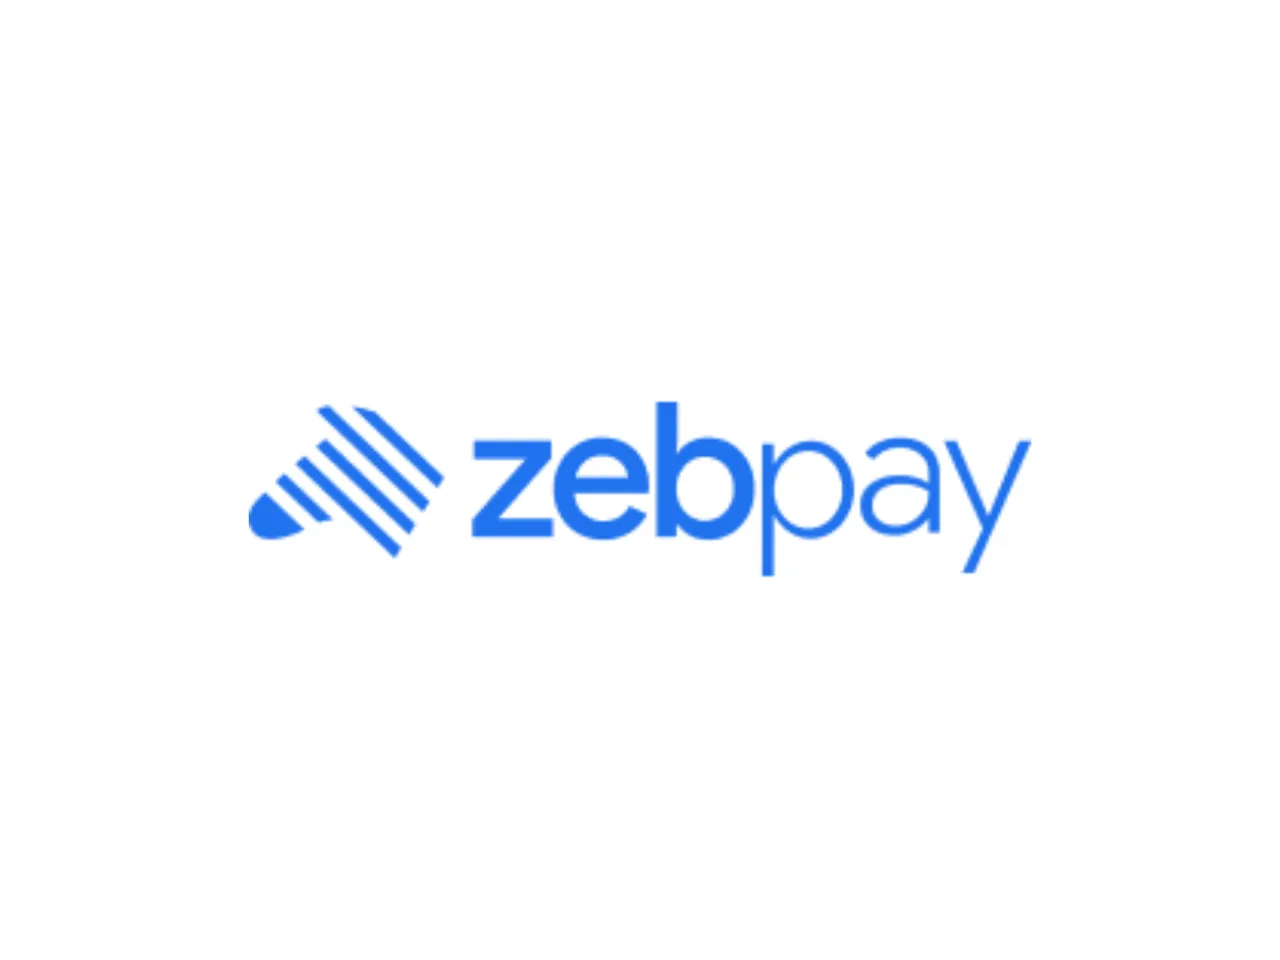 zebpay logo